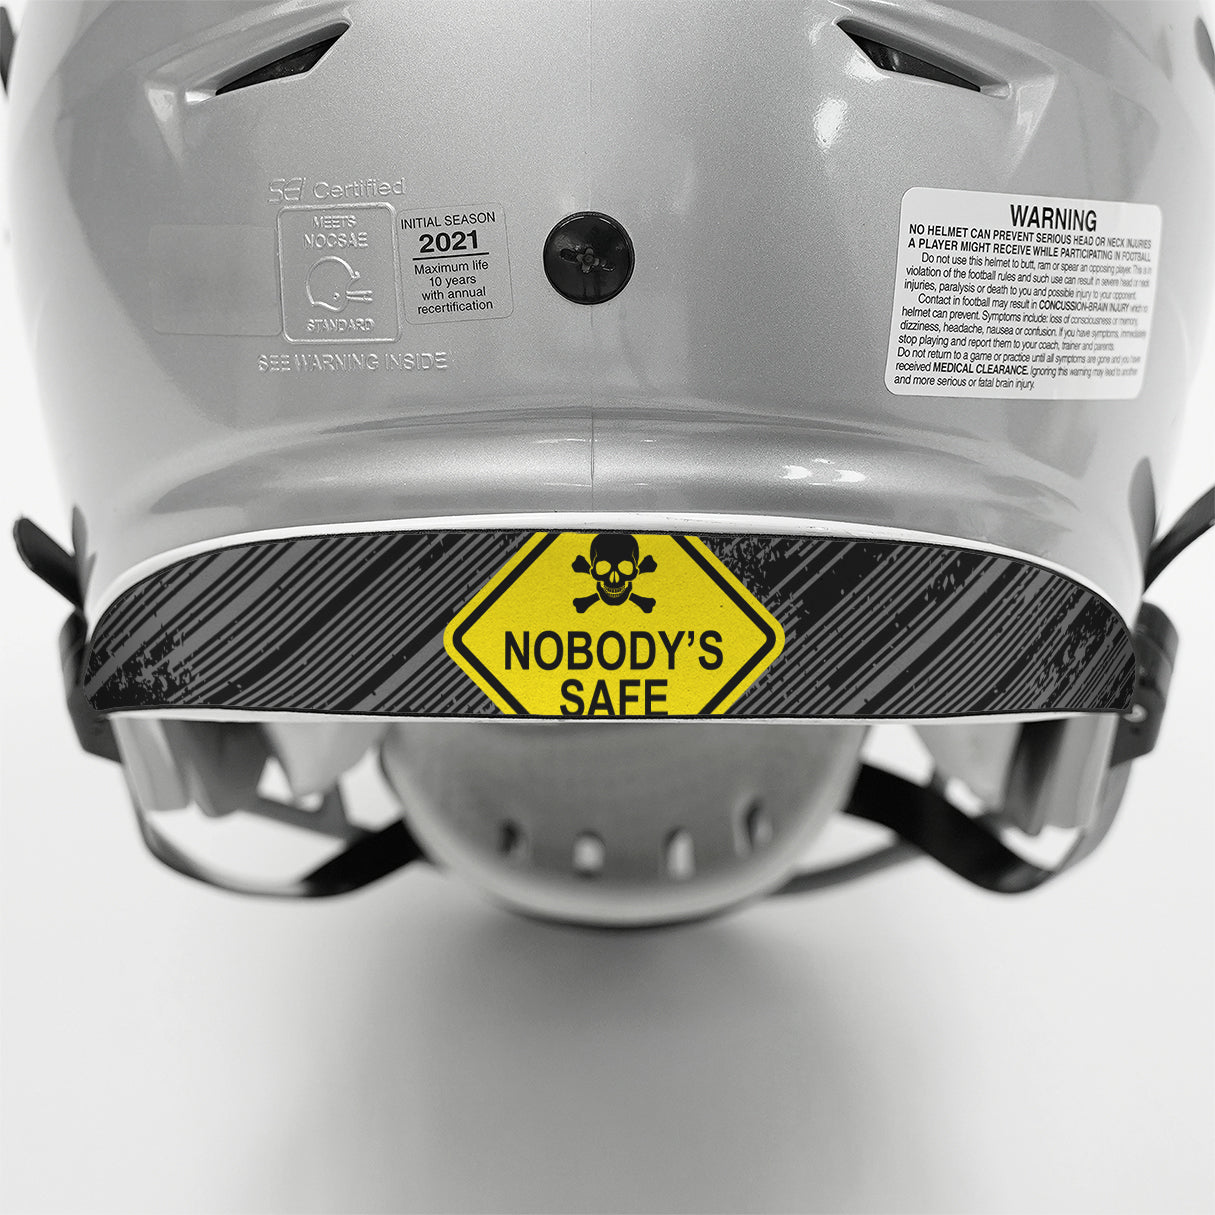 Nobody's Safe Riddell Speedflex Front and Back Bumper Sticker Kit